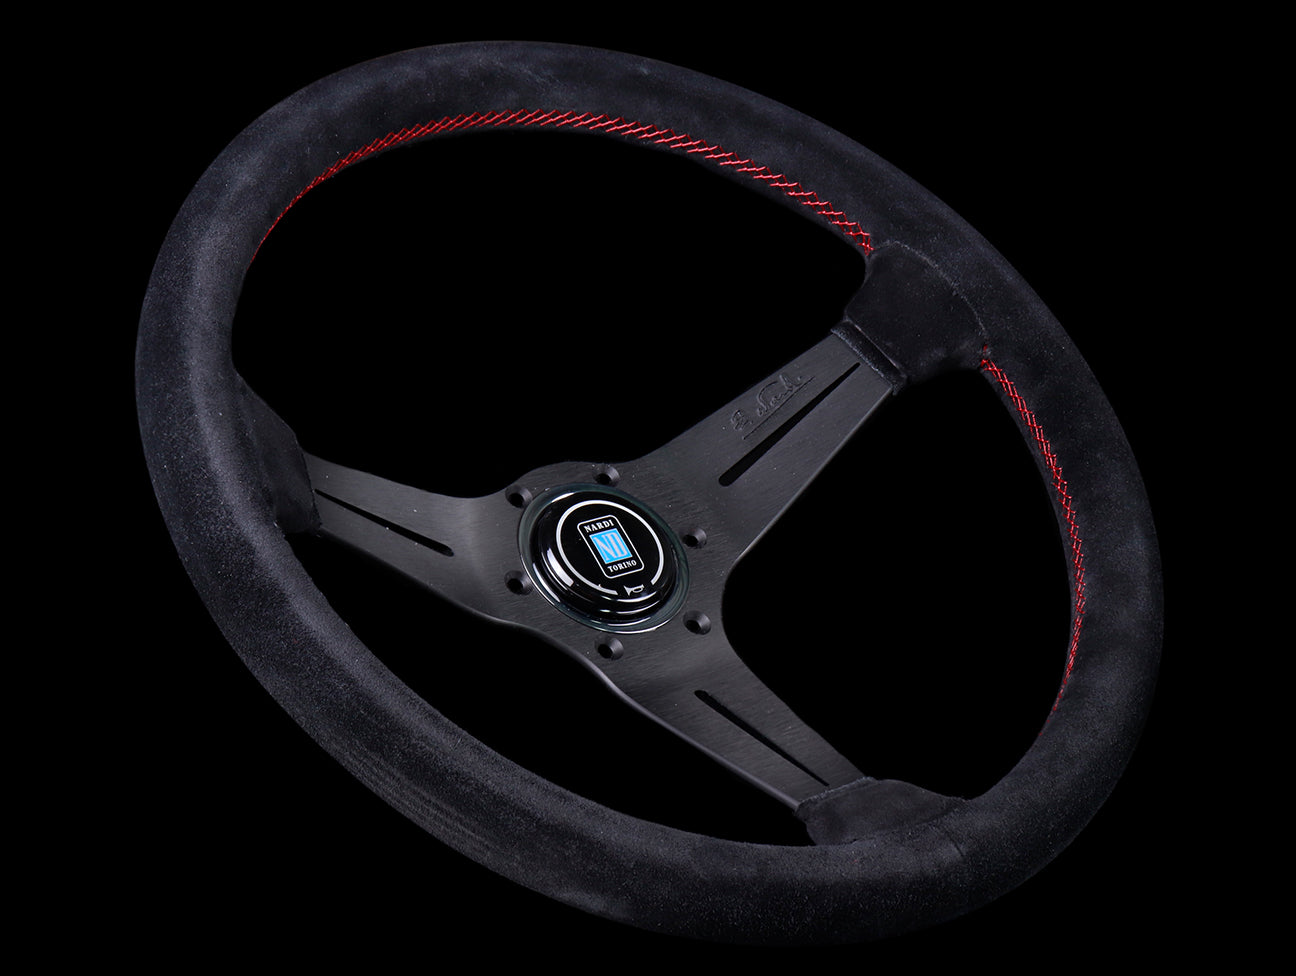 Nardi Sport Rally Deep Corn 350mm Steering Wheel - Black Suede / Red Stitch